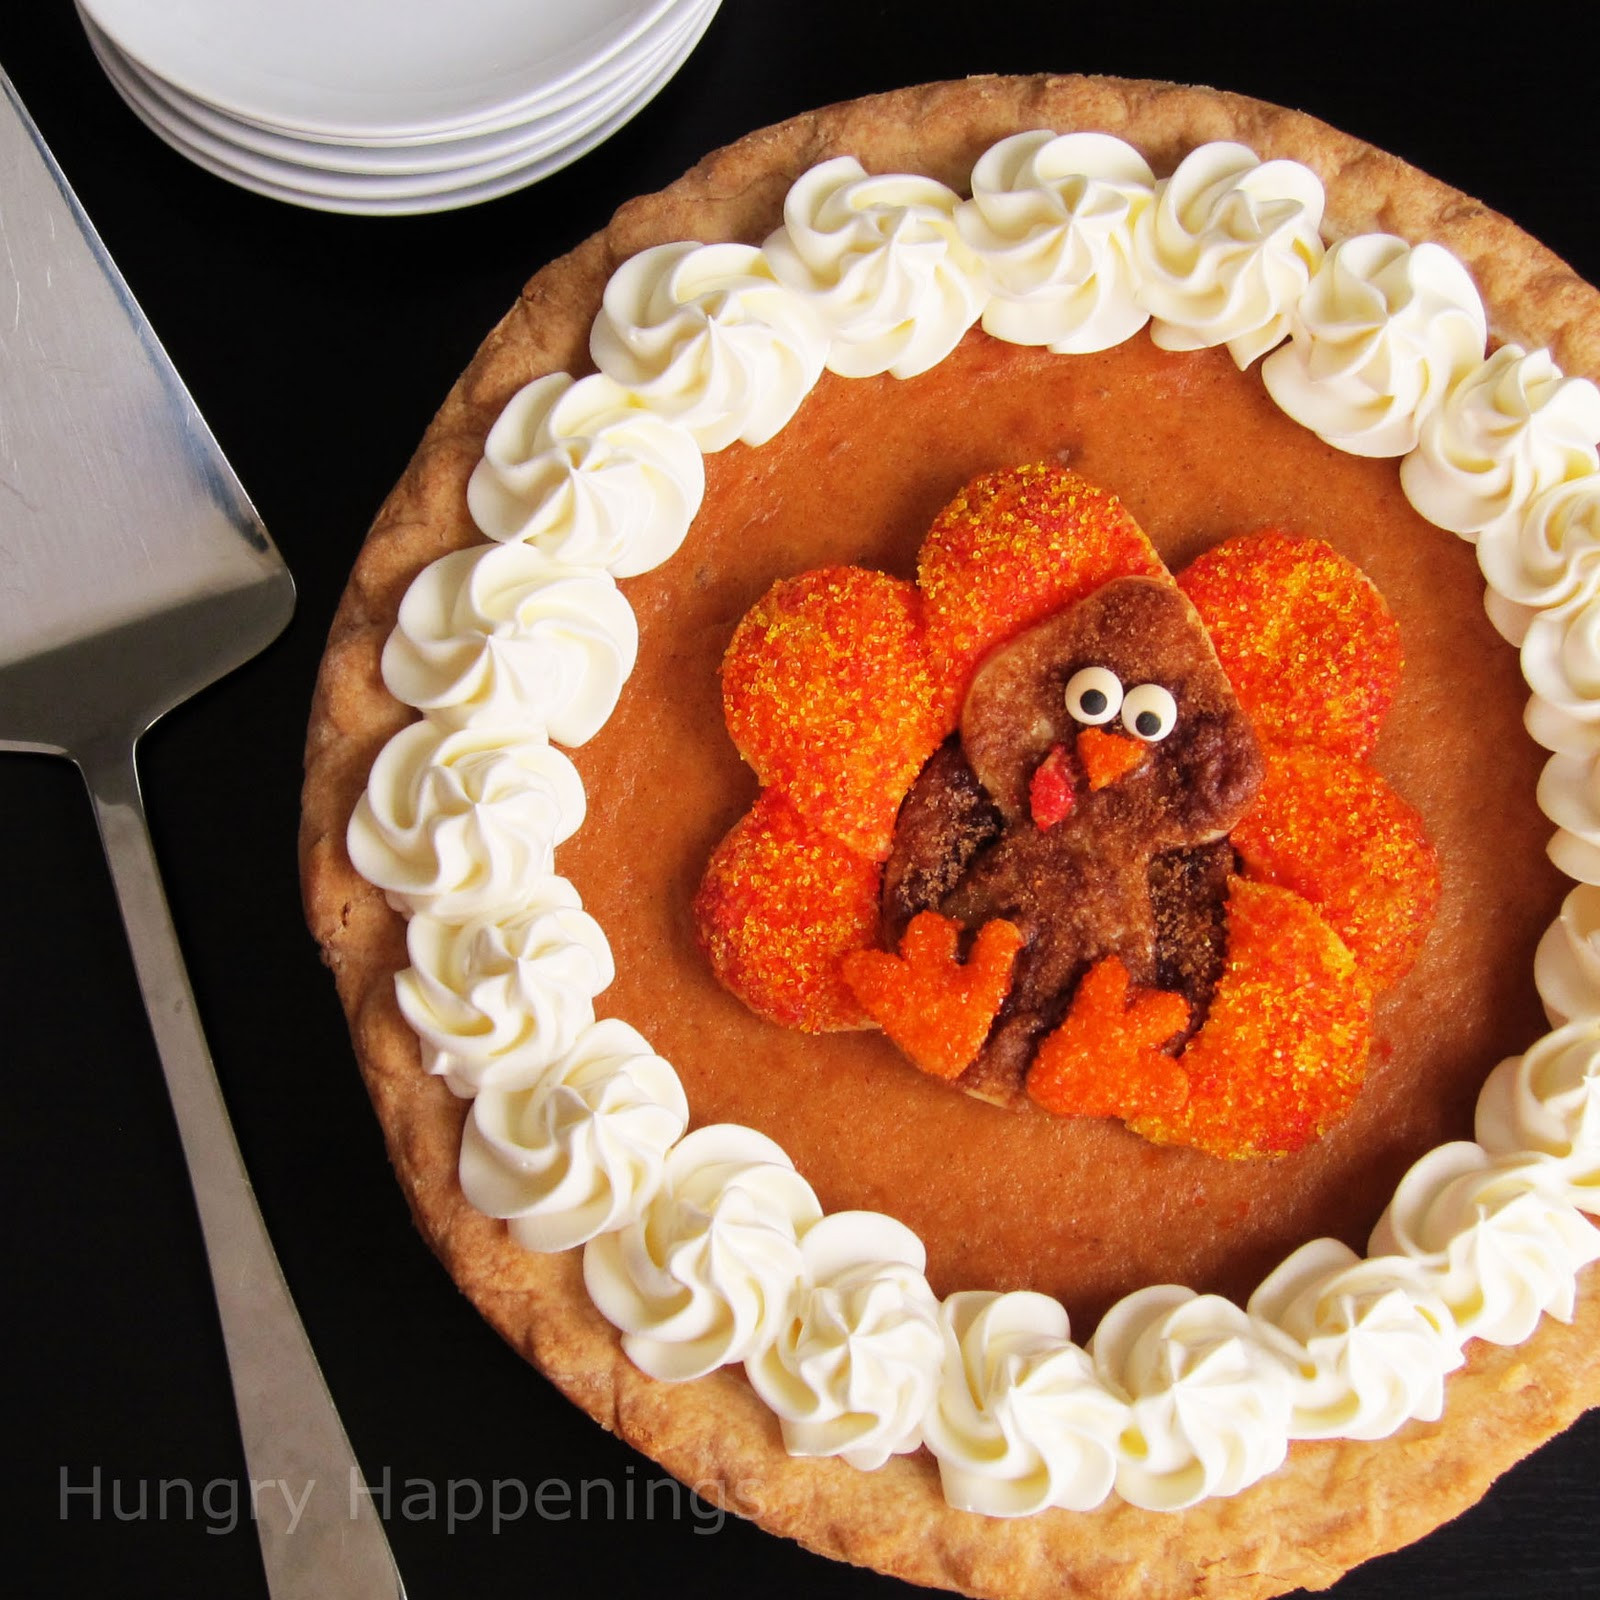 Festive Thanksgiving Desserts
 Decorated Pumpkin Pie Festive Thanksgiving Dessert